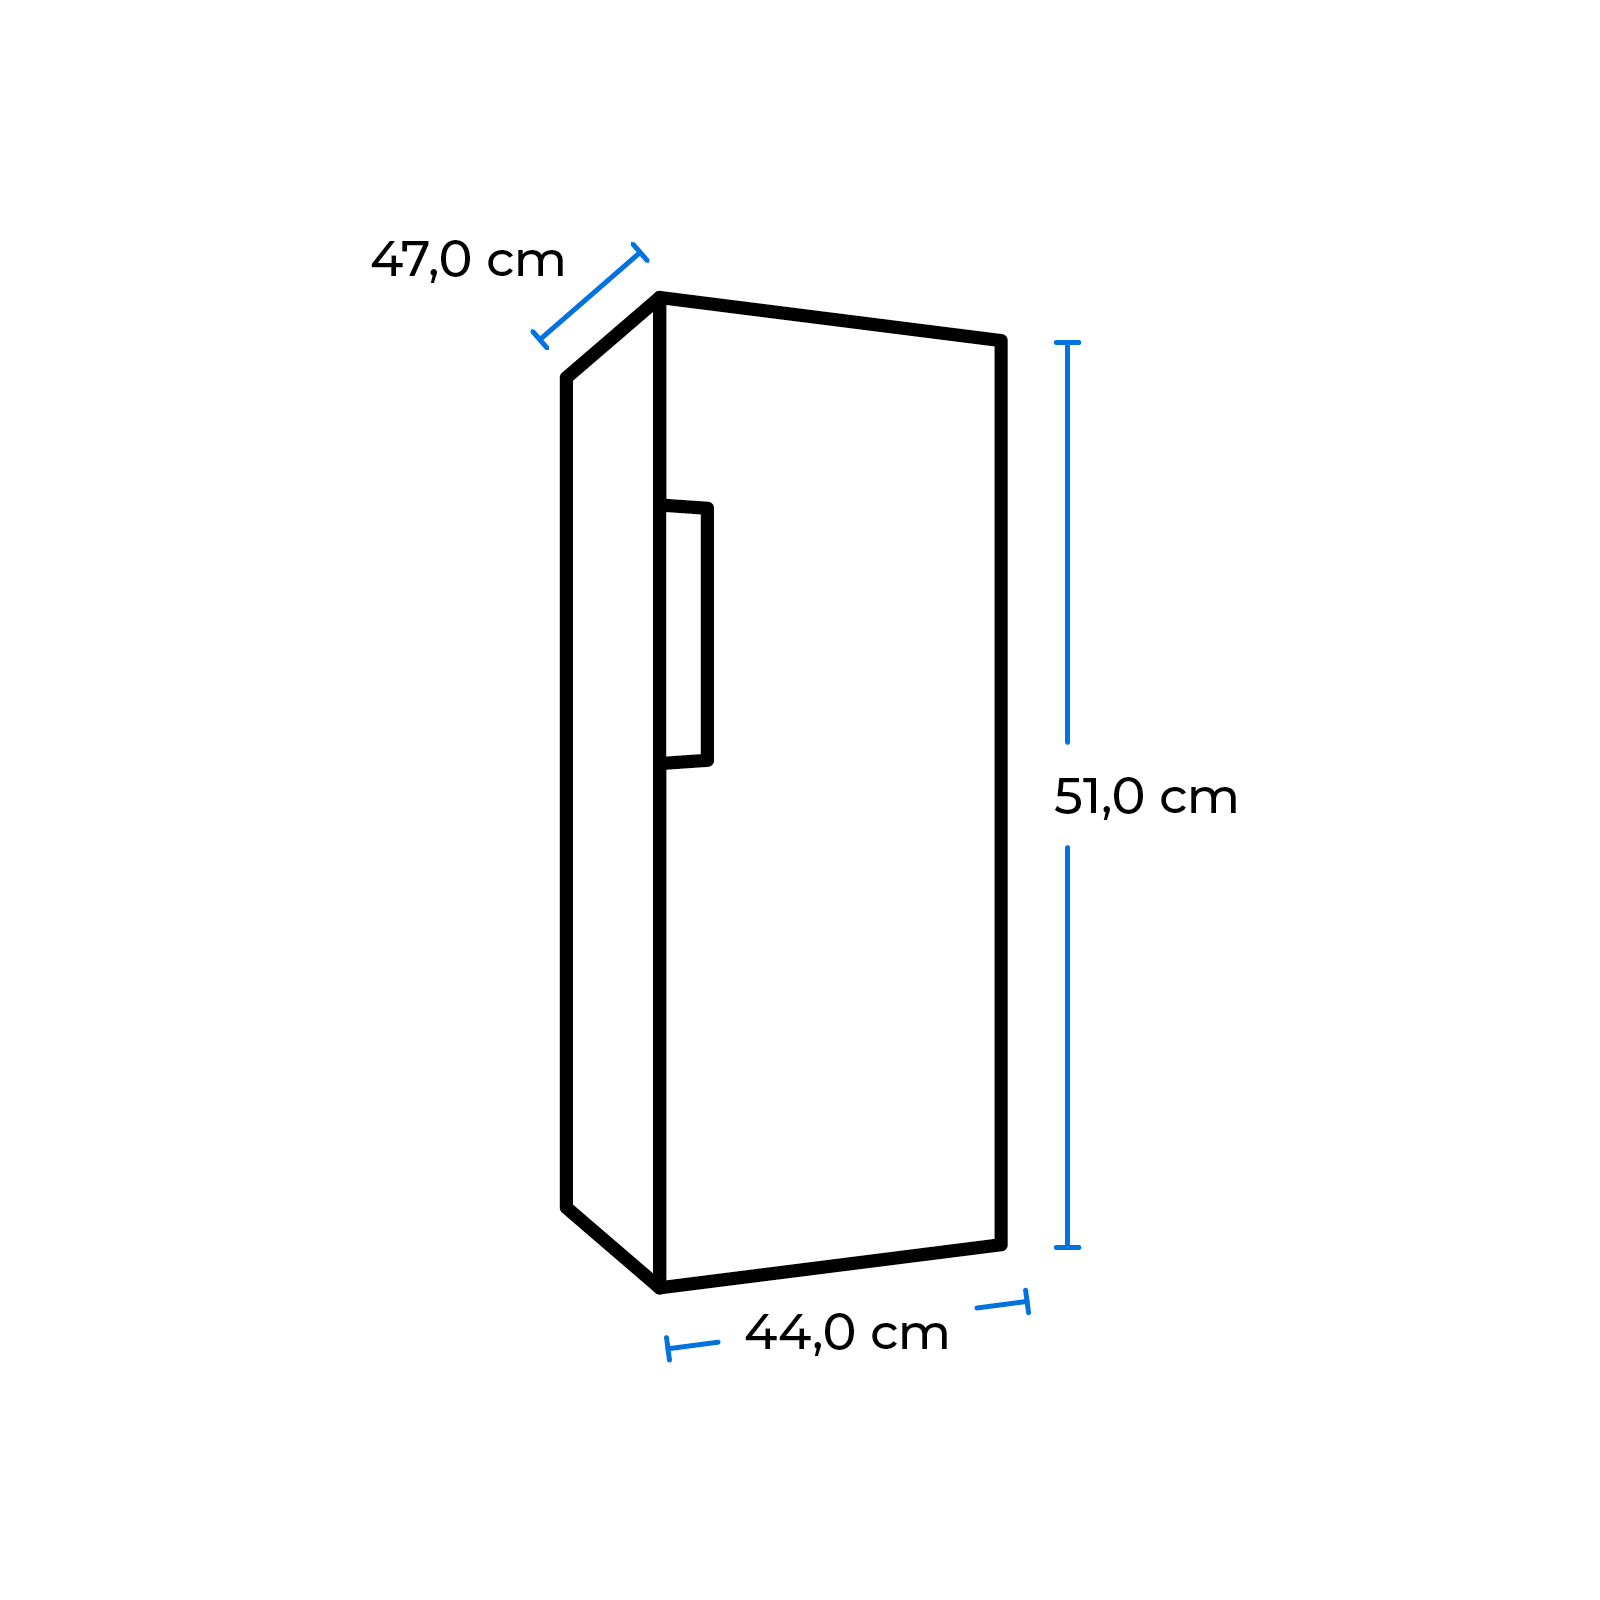 EXQUISIT KB05-V-040E inoxlook Mini Kühlschrank hoch, (E, 510 mm Edelstahloptik)